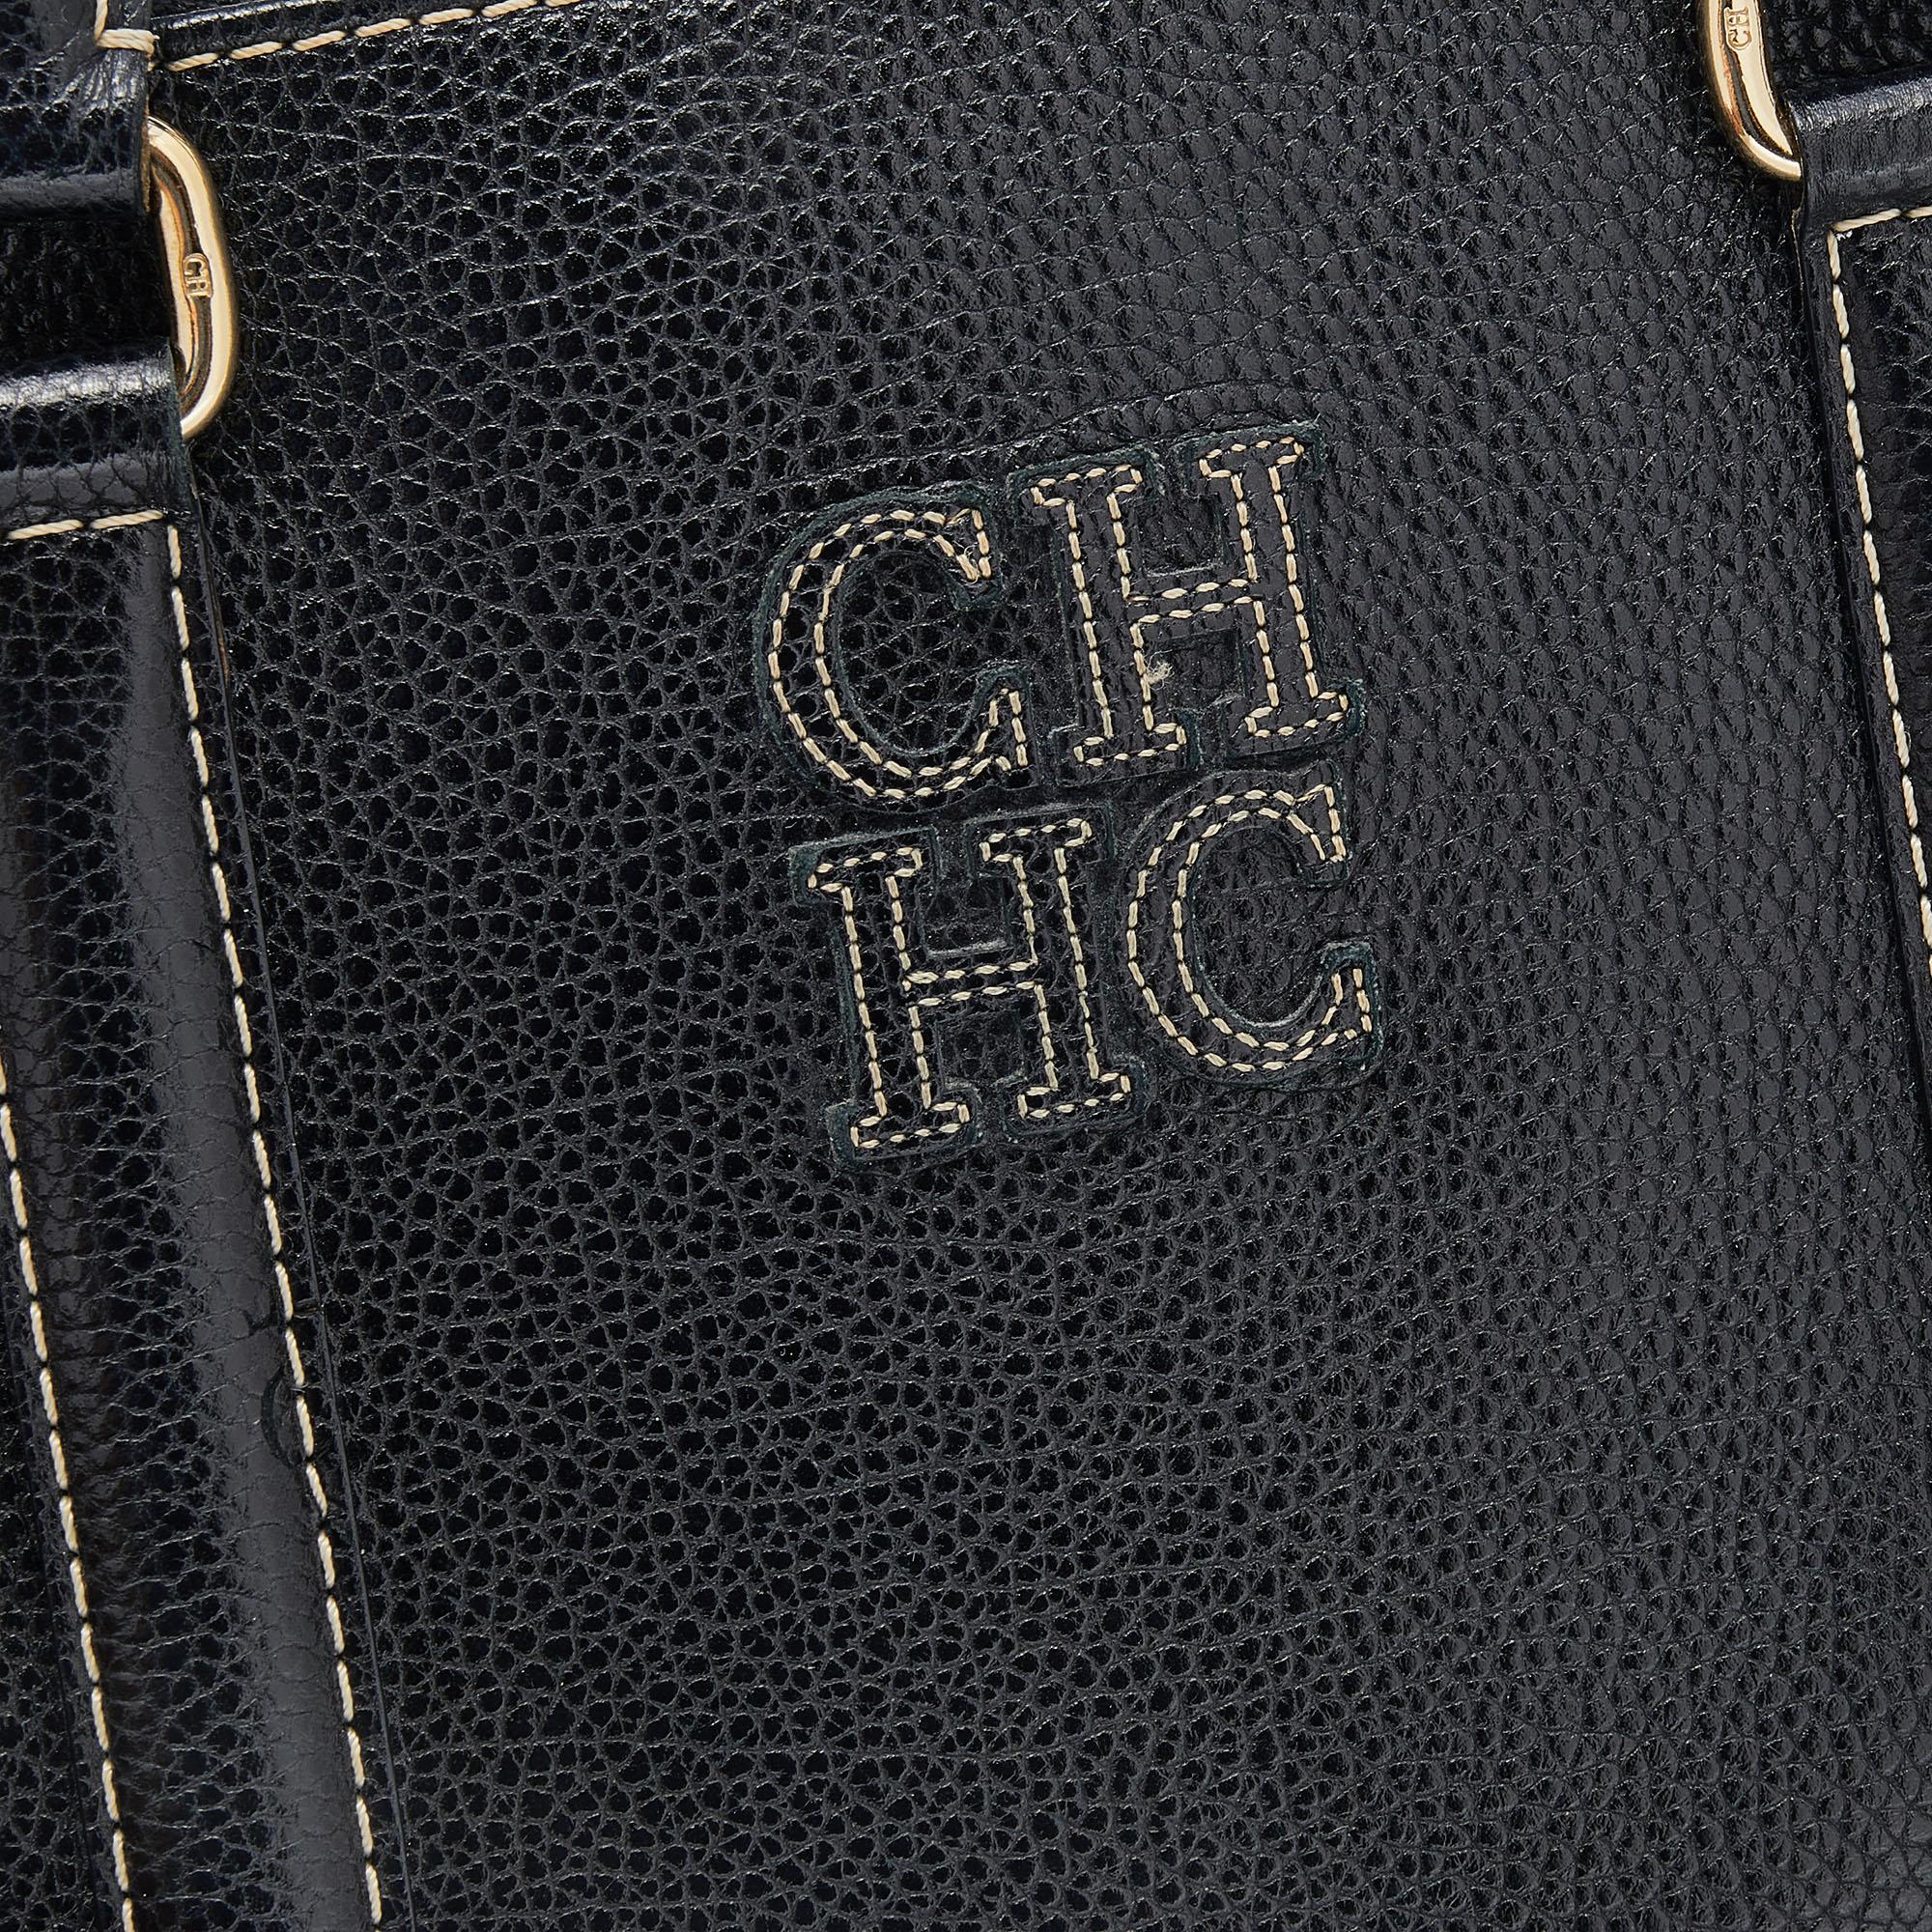 CH Carolina Herrera Black Leather Tote 6